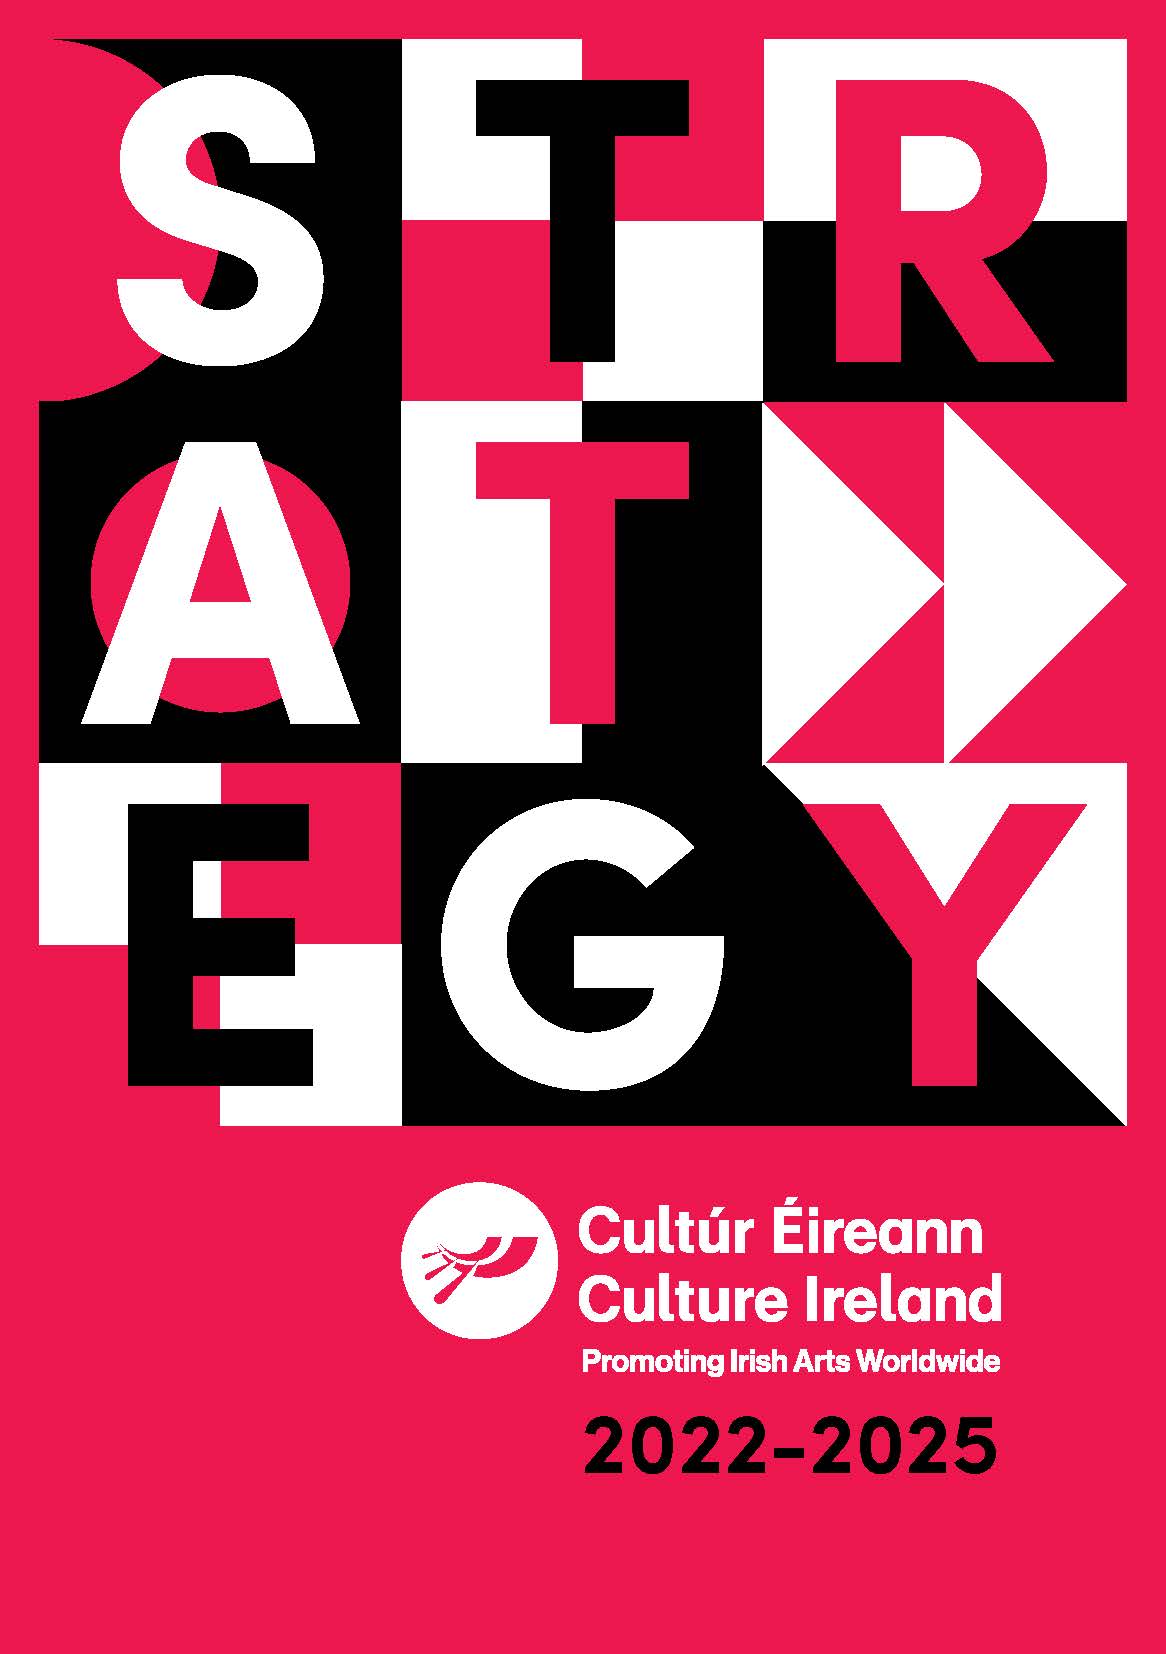 Culture Ireland's Promoting Irish Arts Worldwide